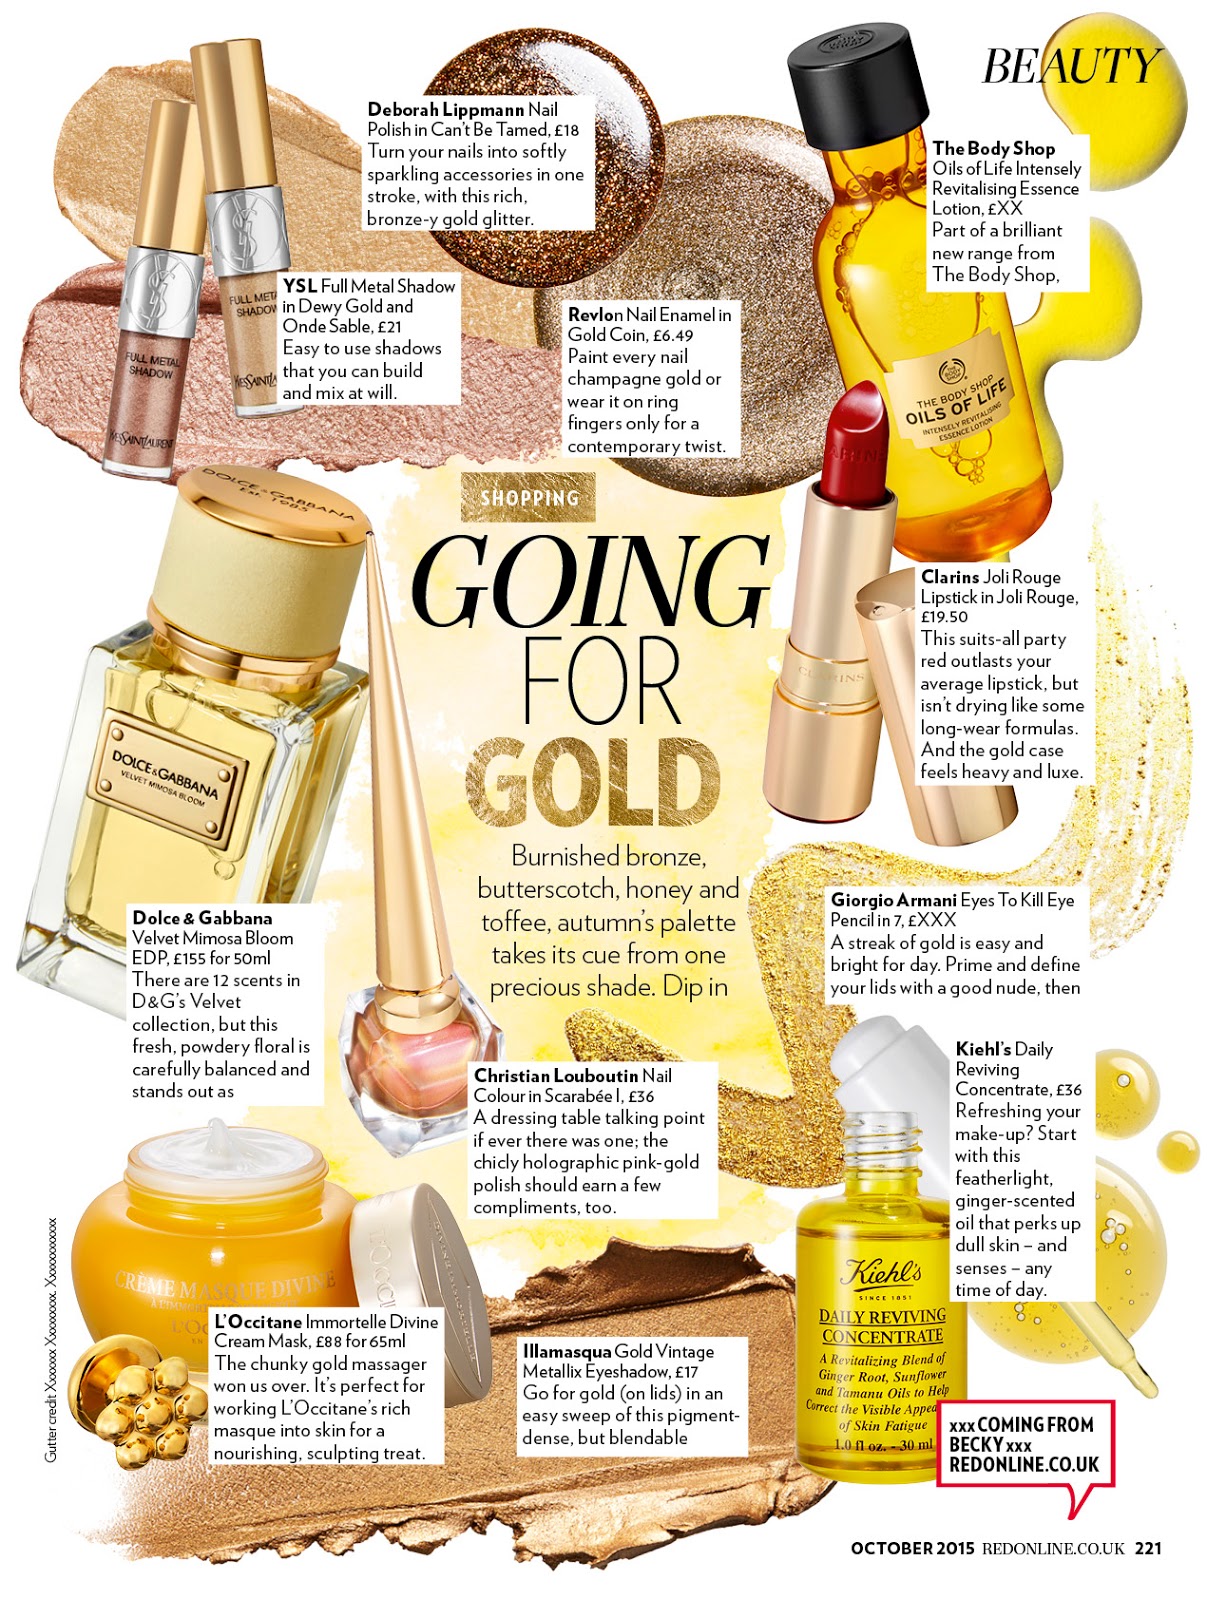 Zuki_Turner_Graphic design_beauty shopping gold.jpg